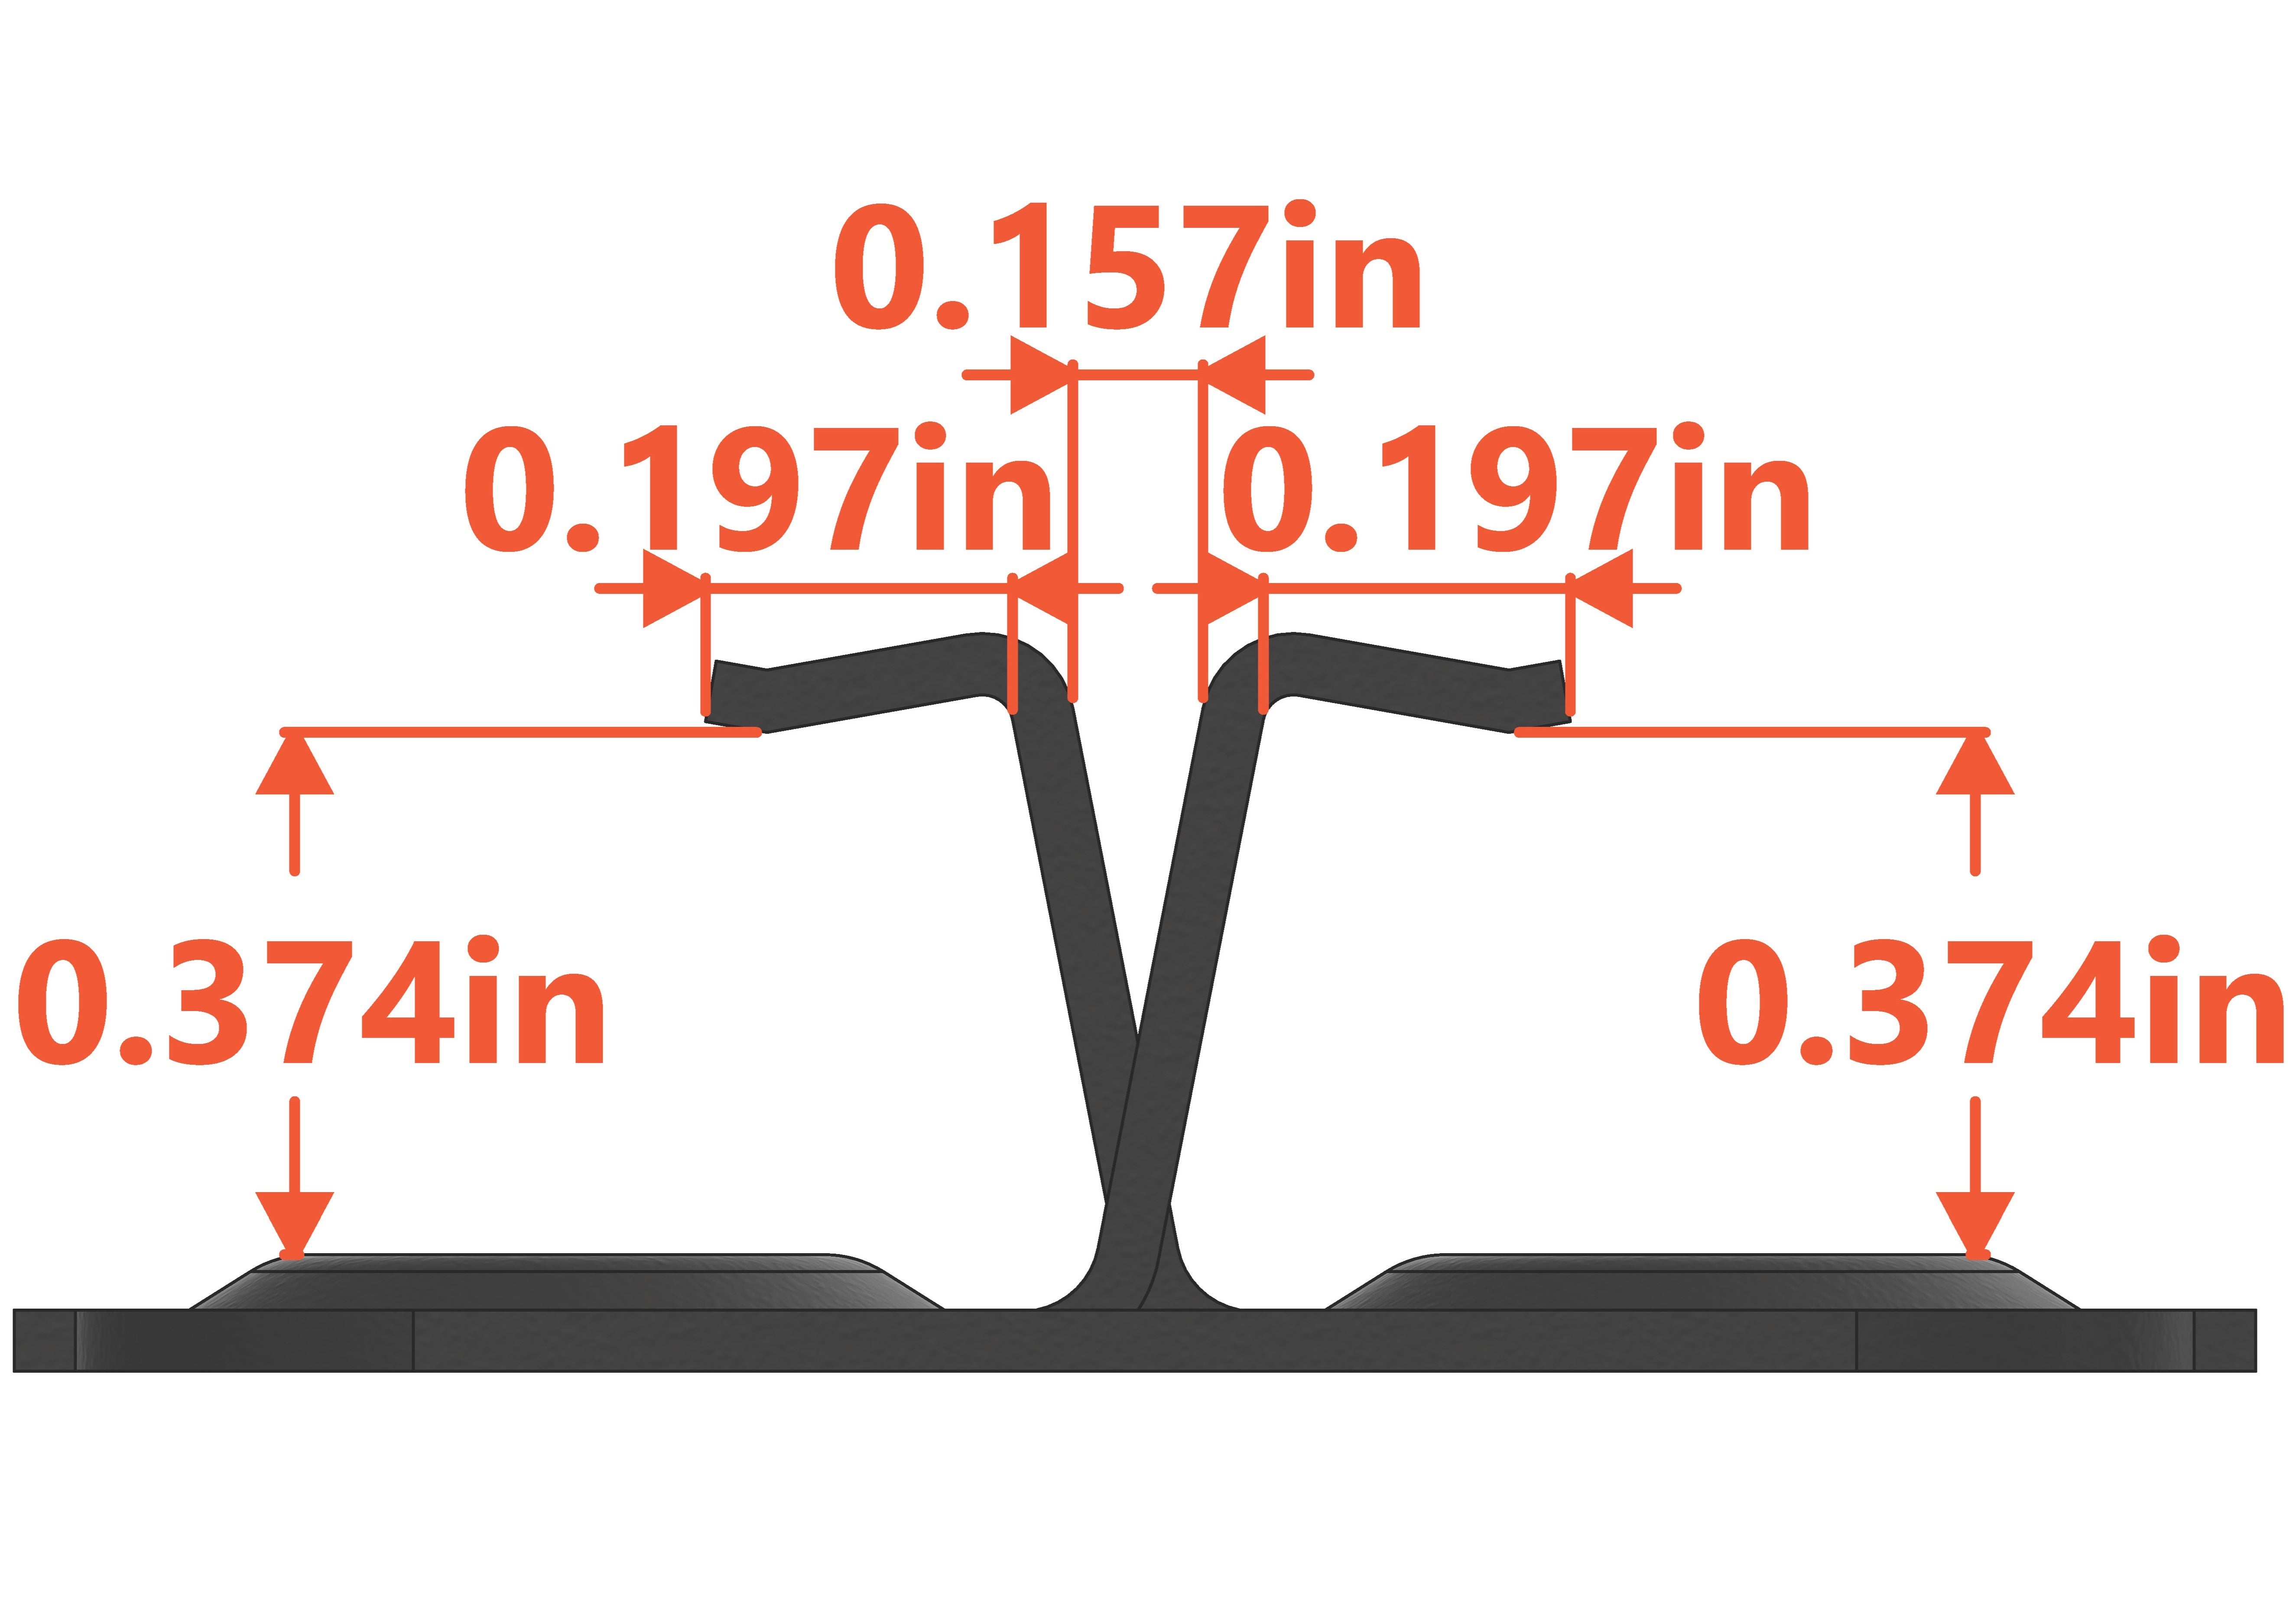 WPC Hidden Deck Clip: Galvanized - 9.5mm